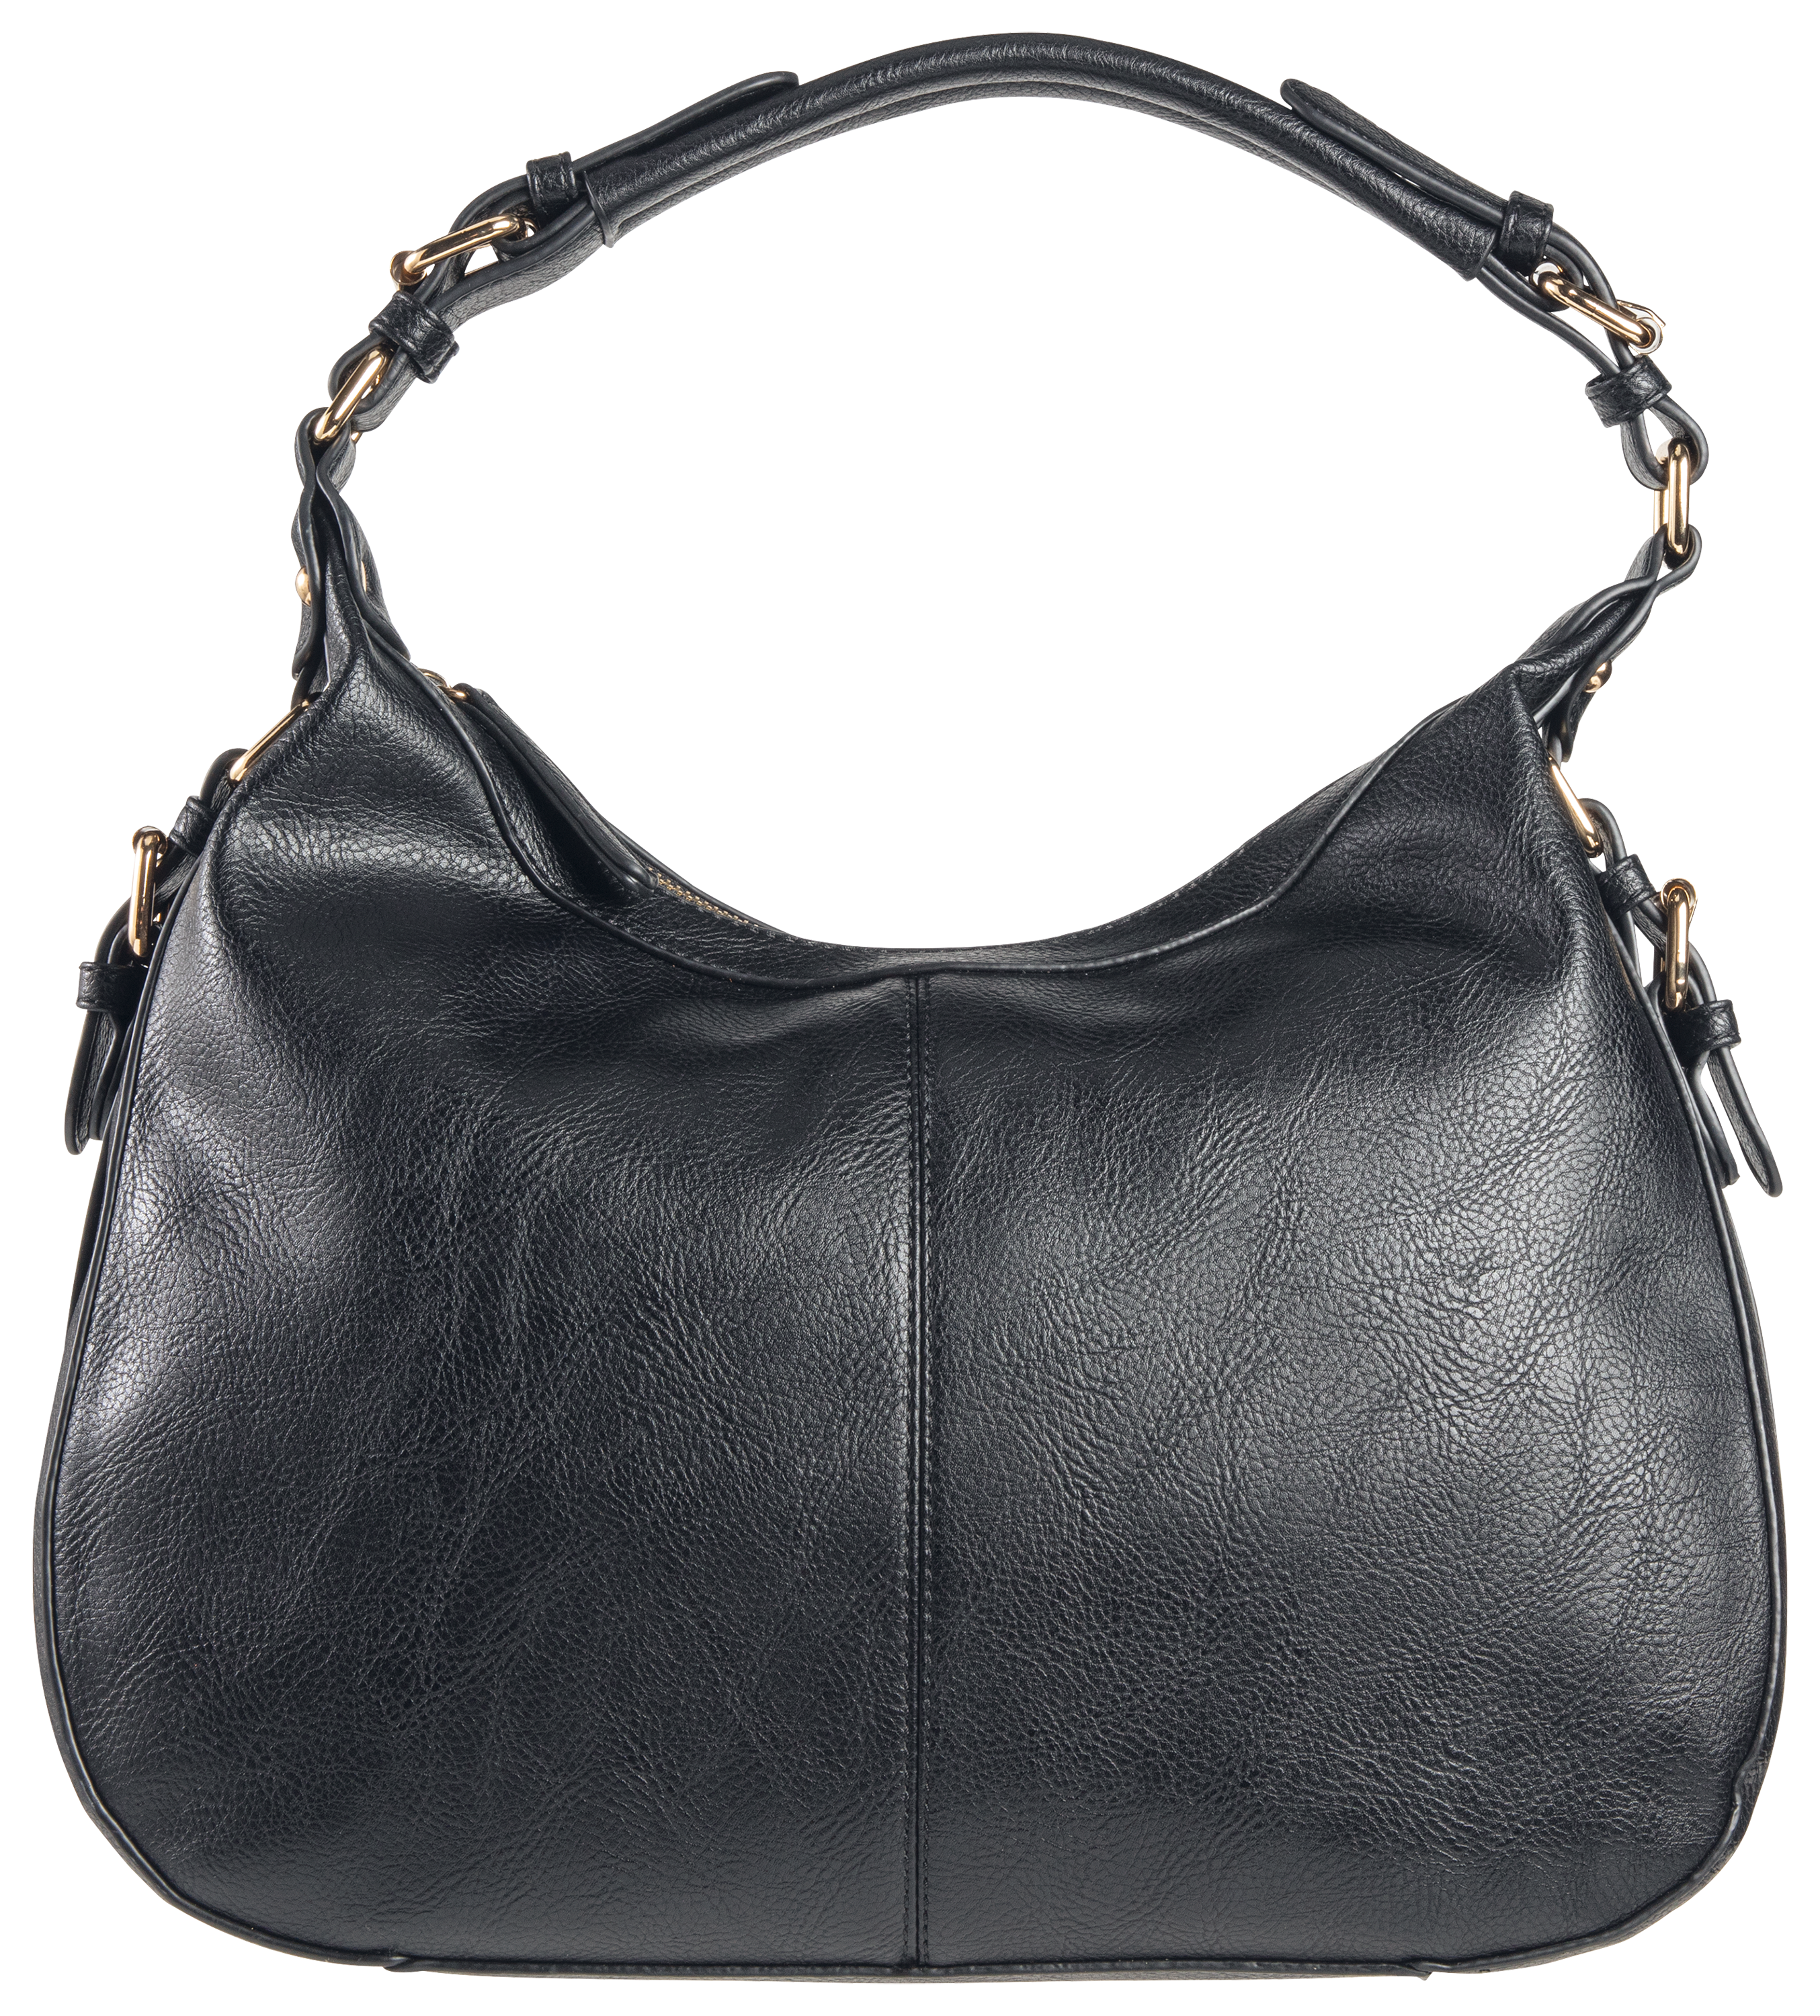 Emperia Chloe Concealed Carry Hobo Handbag | Bass Pro Shops